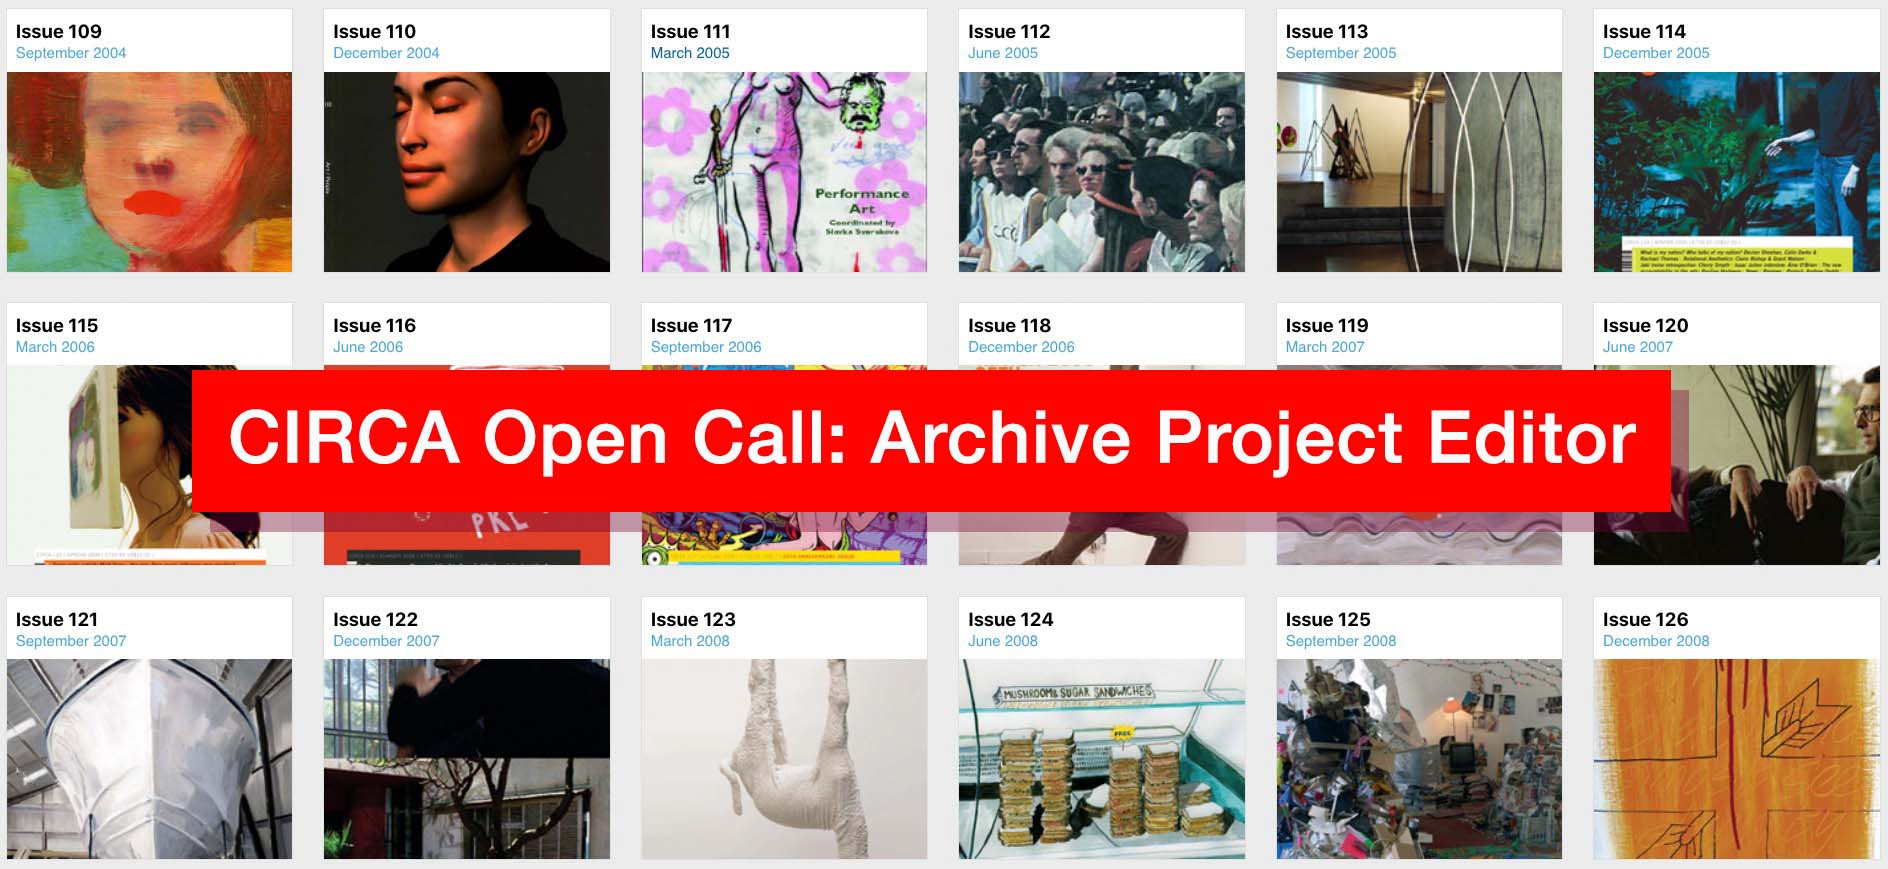 CIRCA Open Call: Archive Project Editor